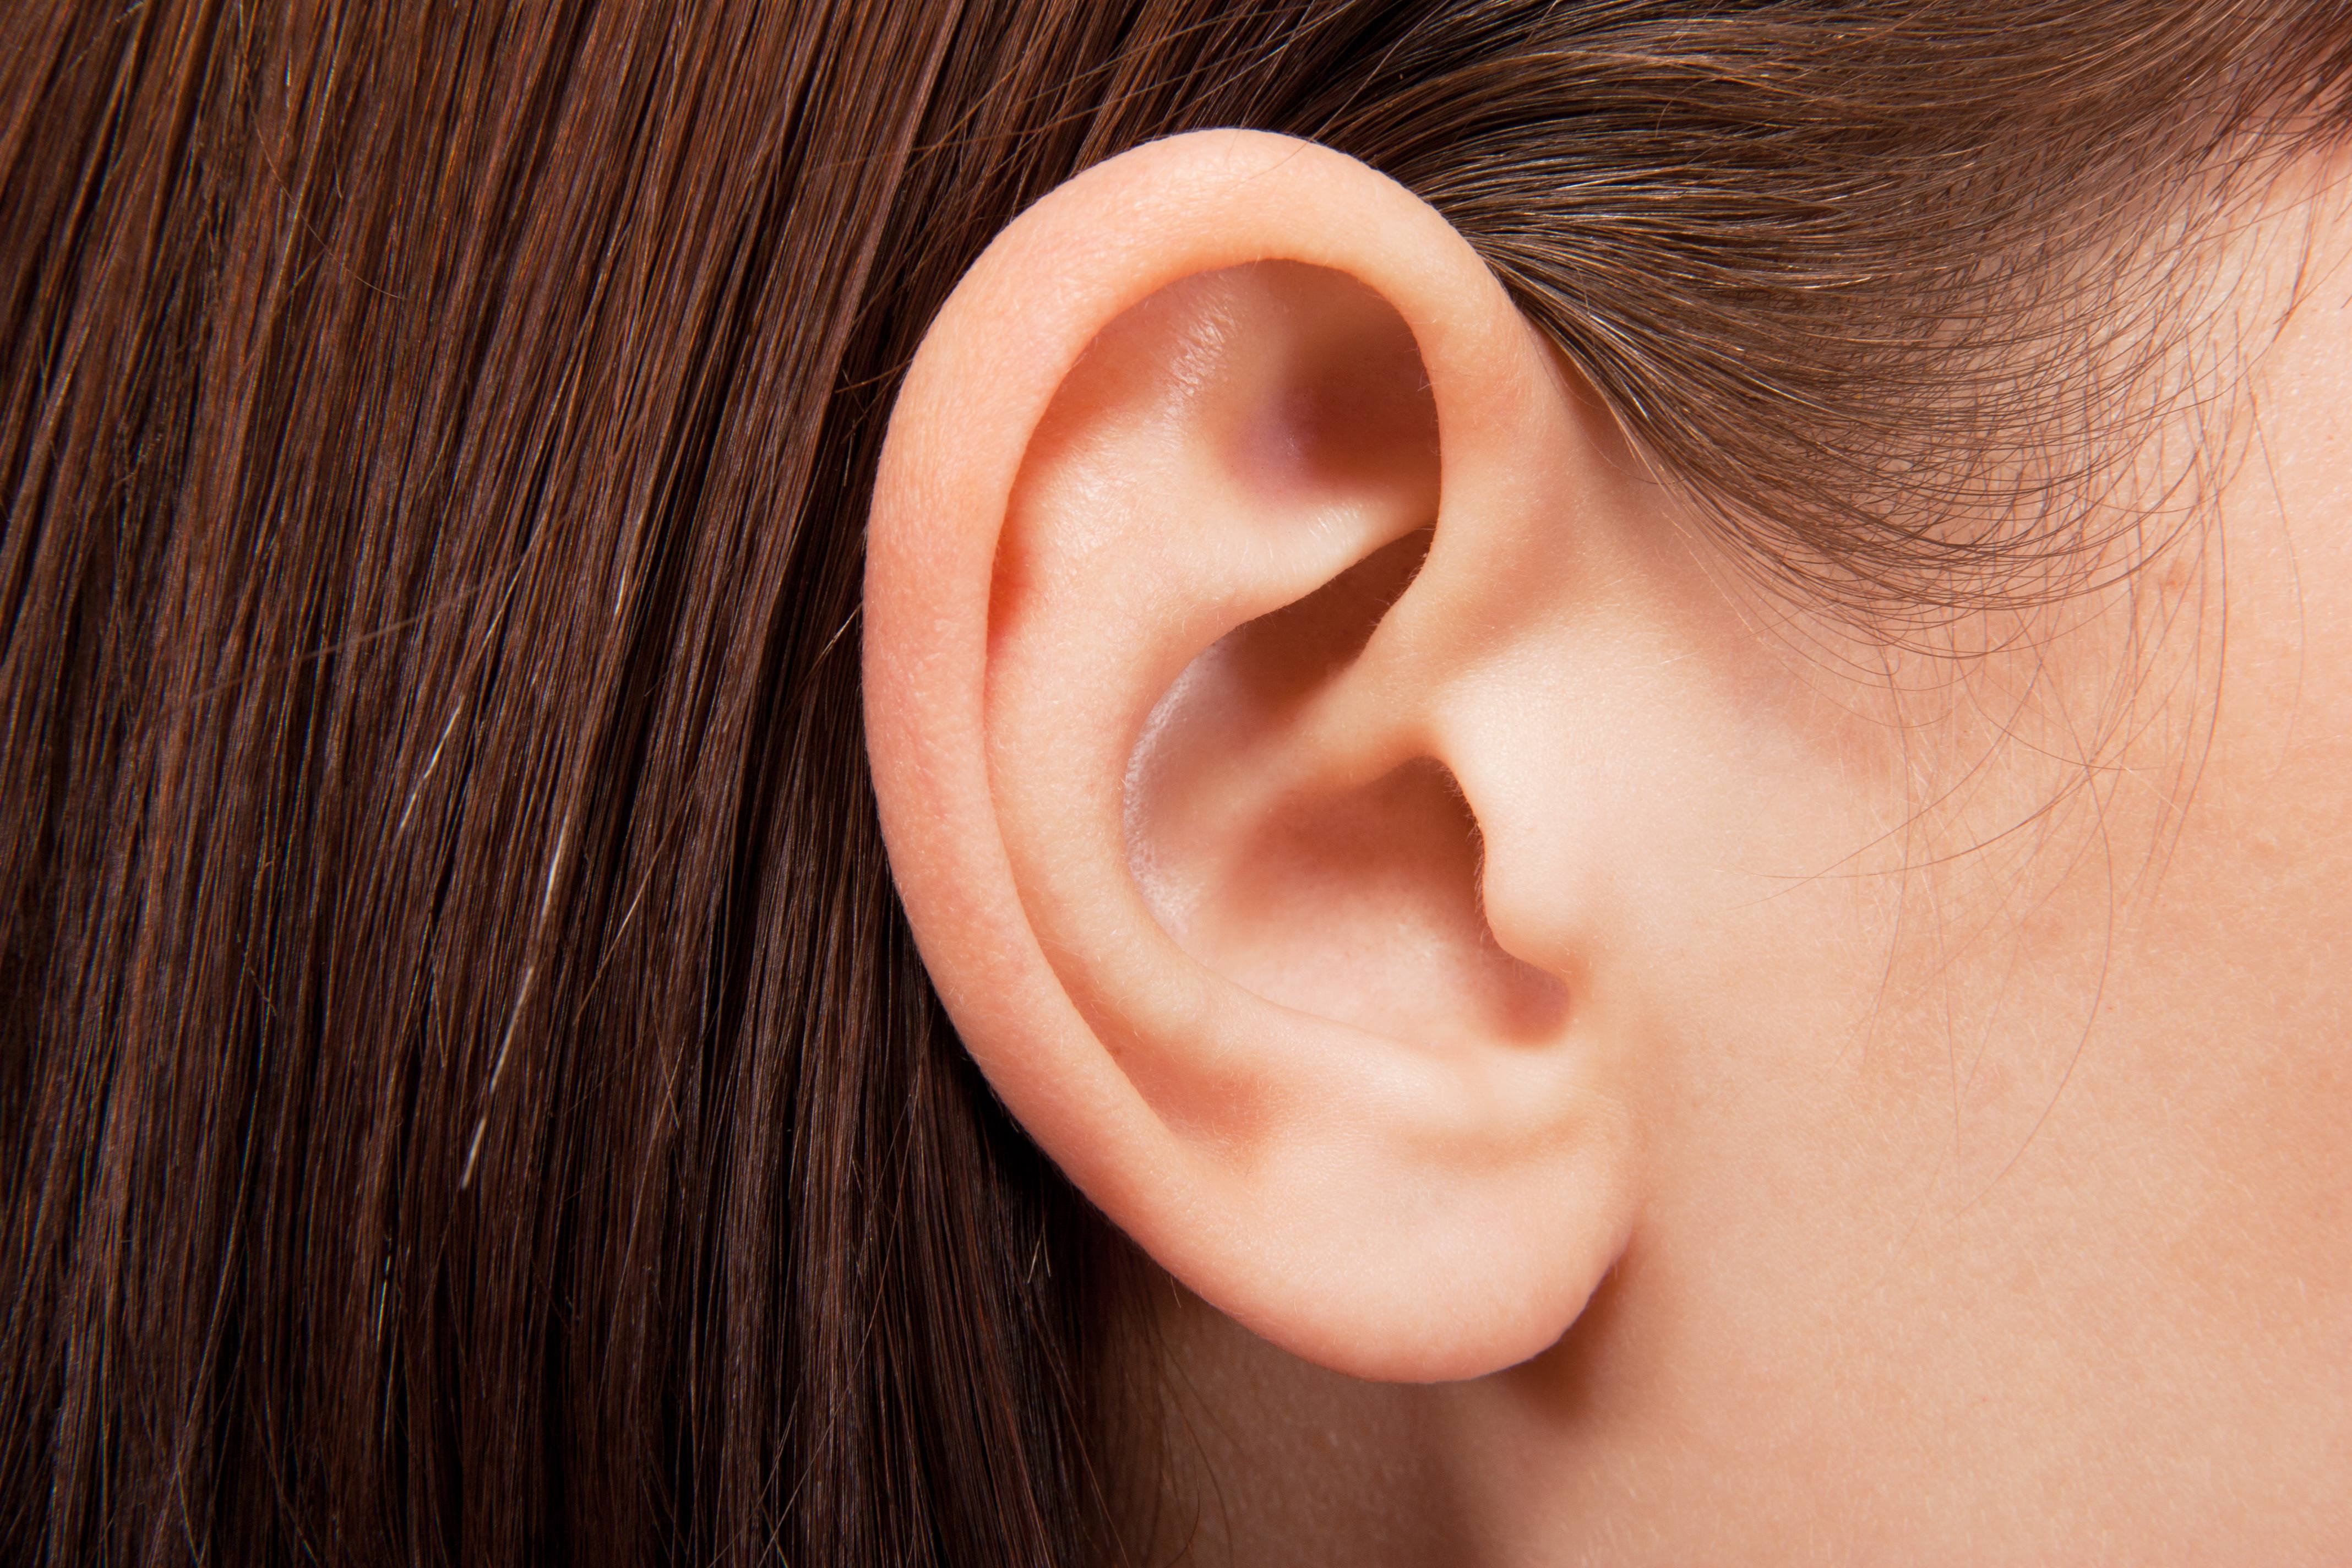 a closeup of a young girl's ear